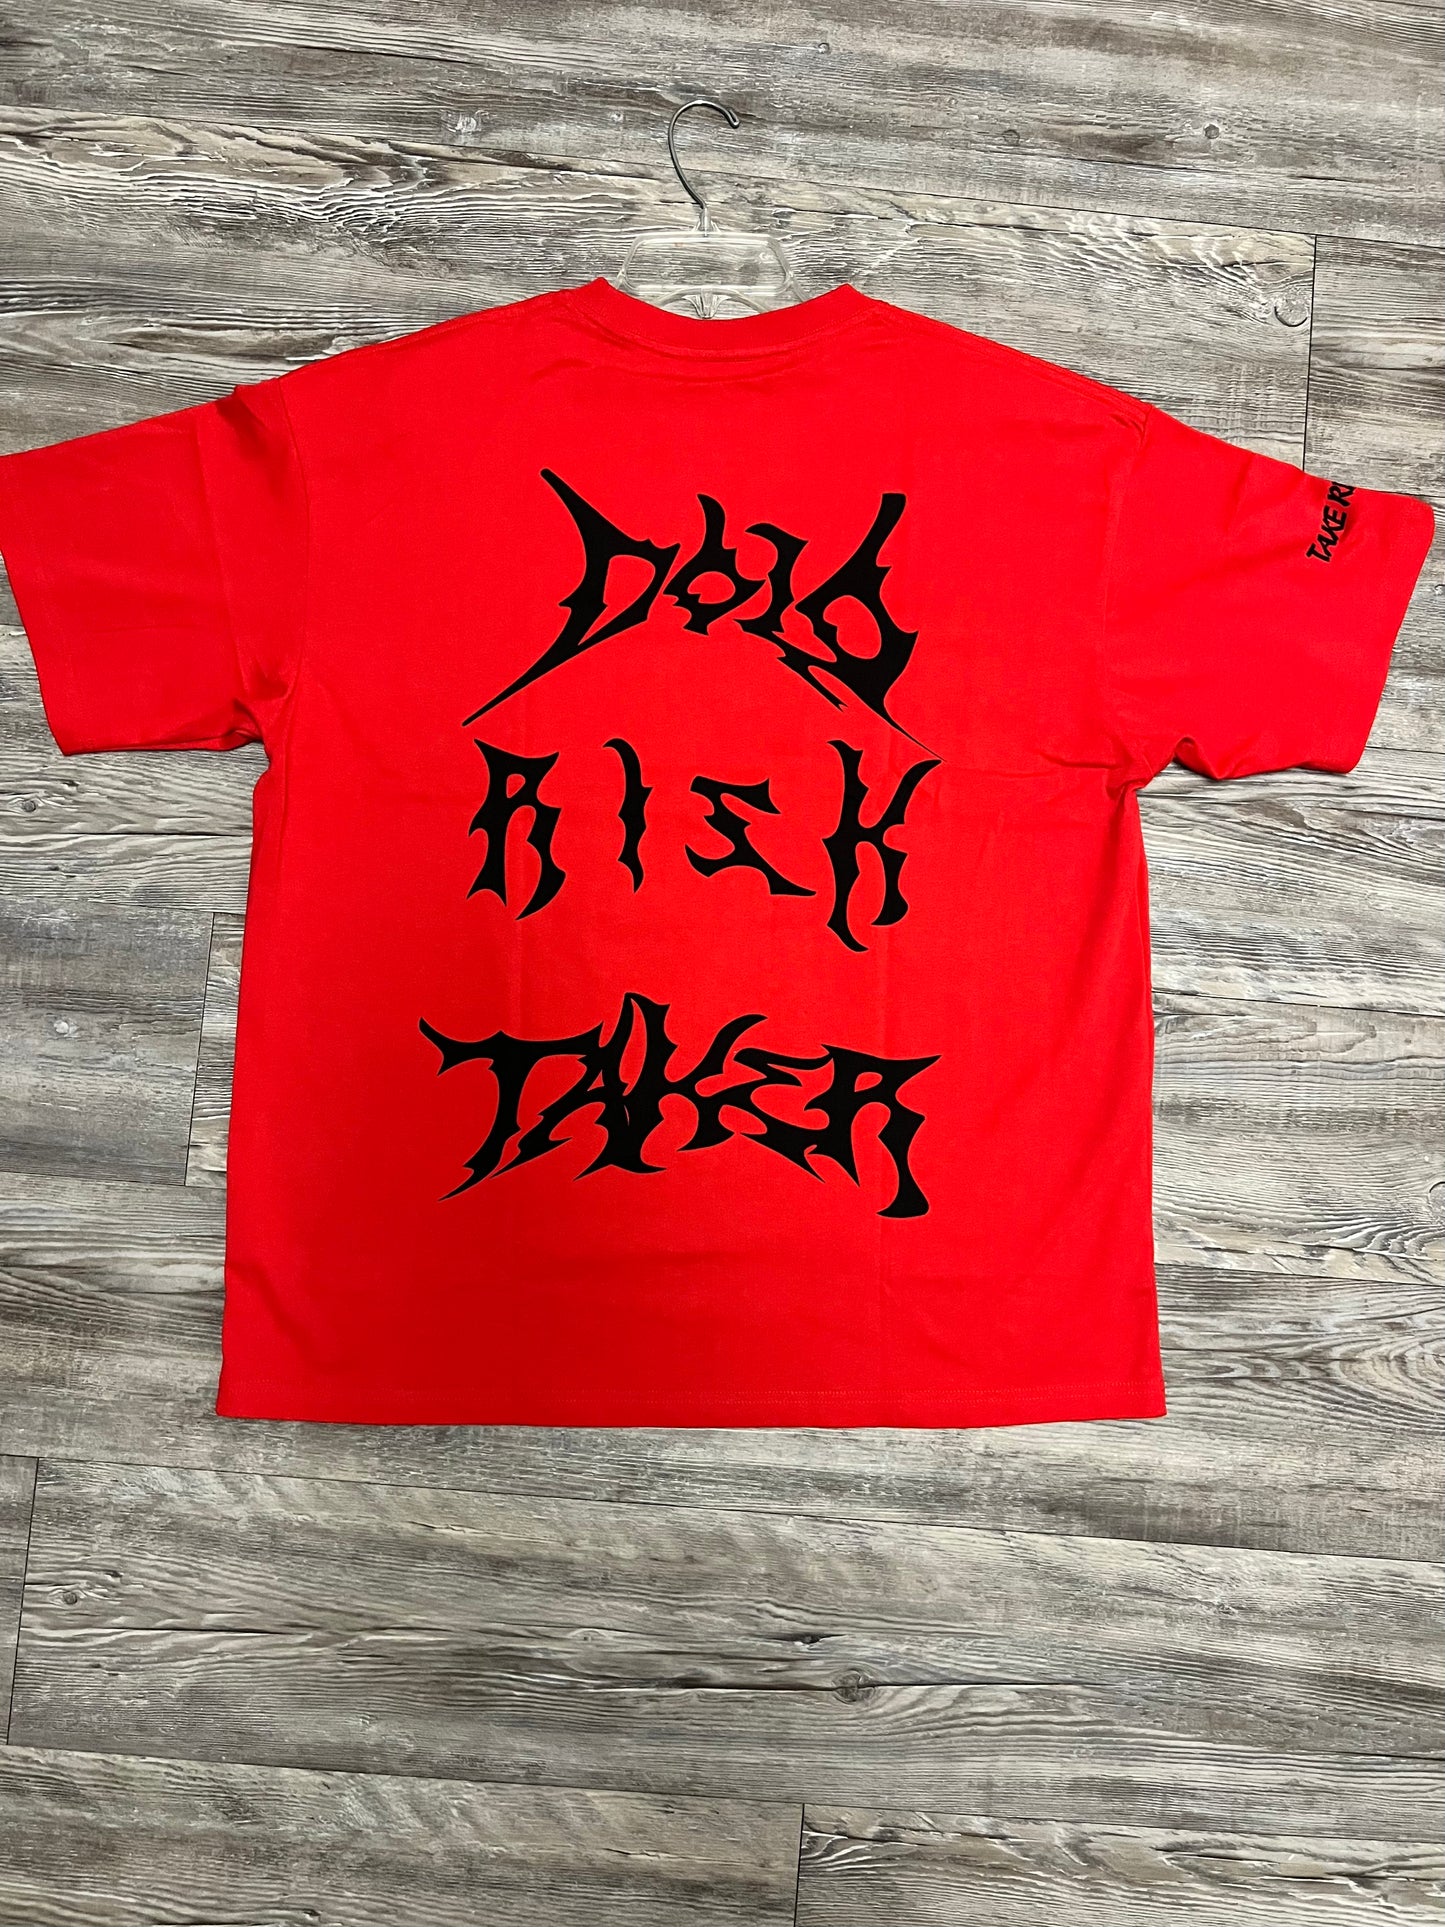 Dolo “Risk taker” Bloodshot Red T-Shirt